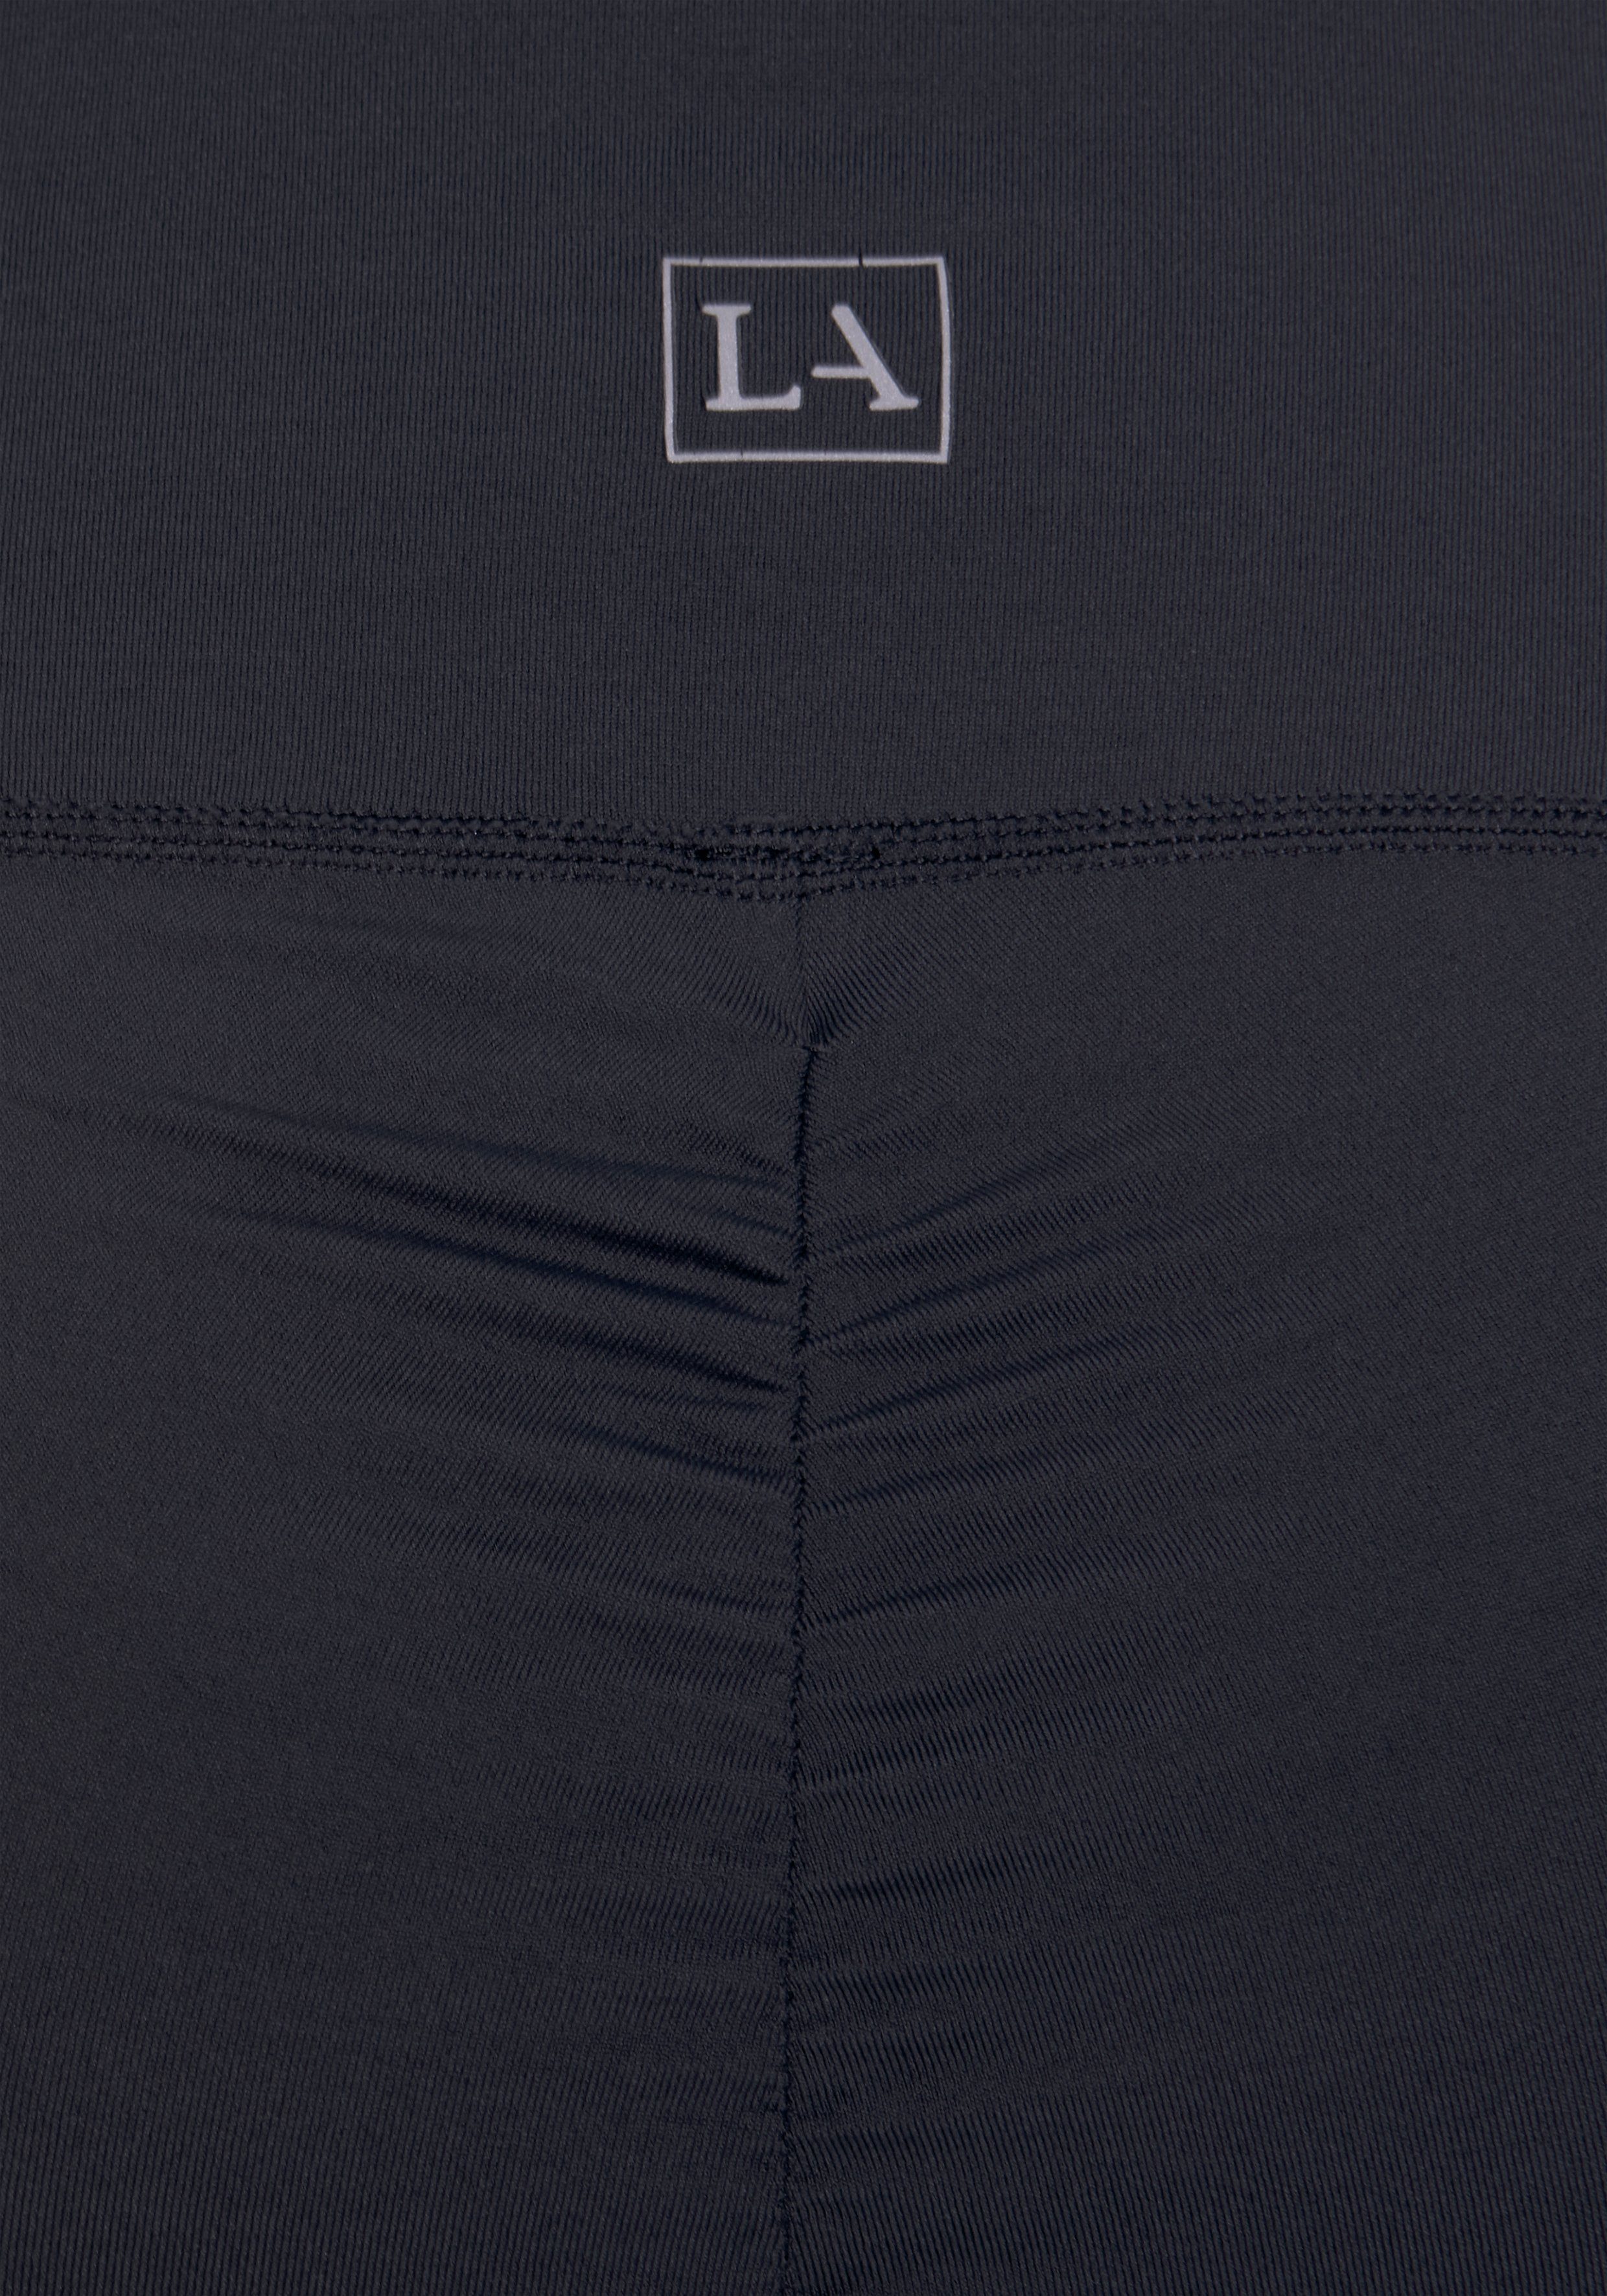 Raffung, -Sport Loungewear Funktionsleggings Leggings mit LASCANA schwarz ACTIVE kleiner